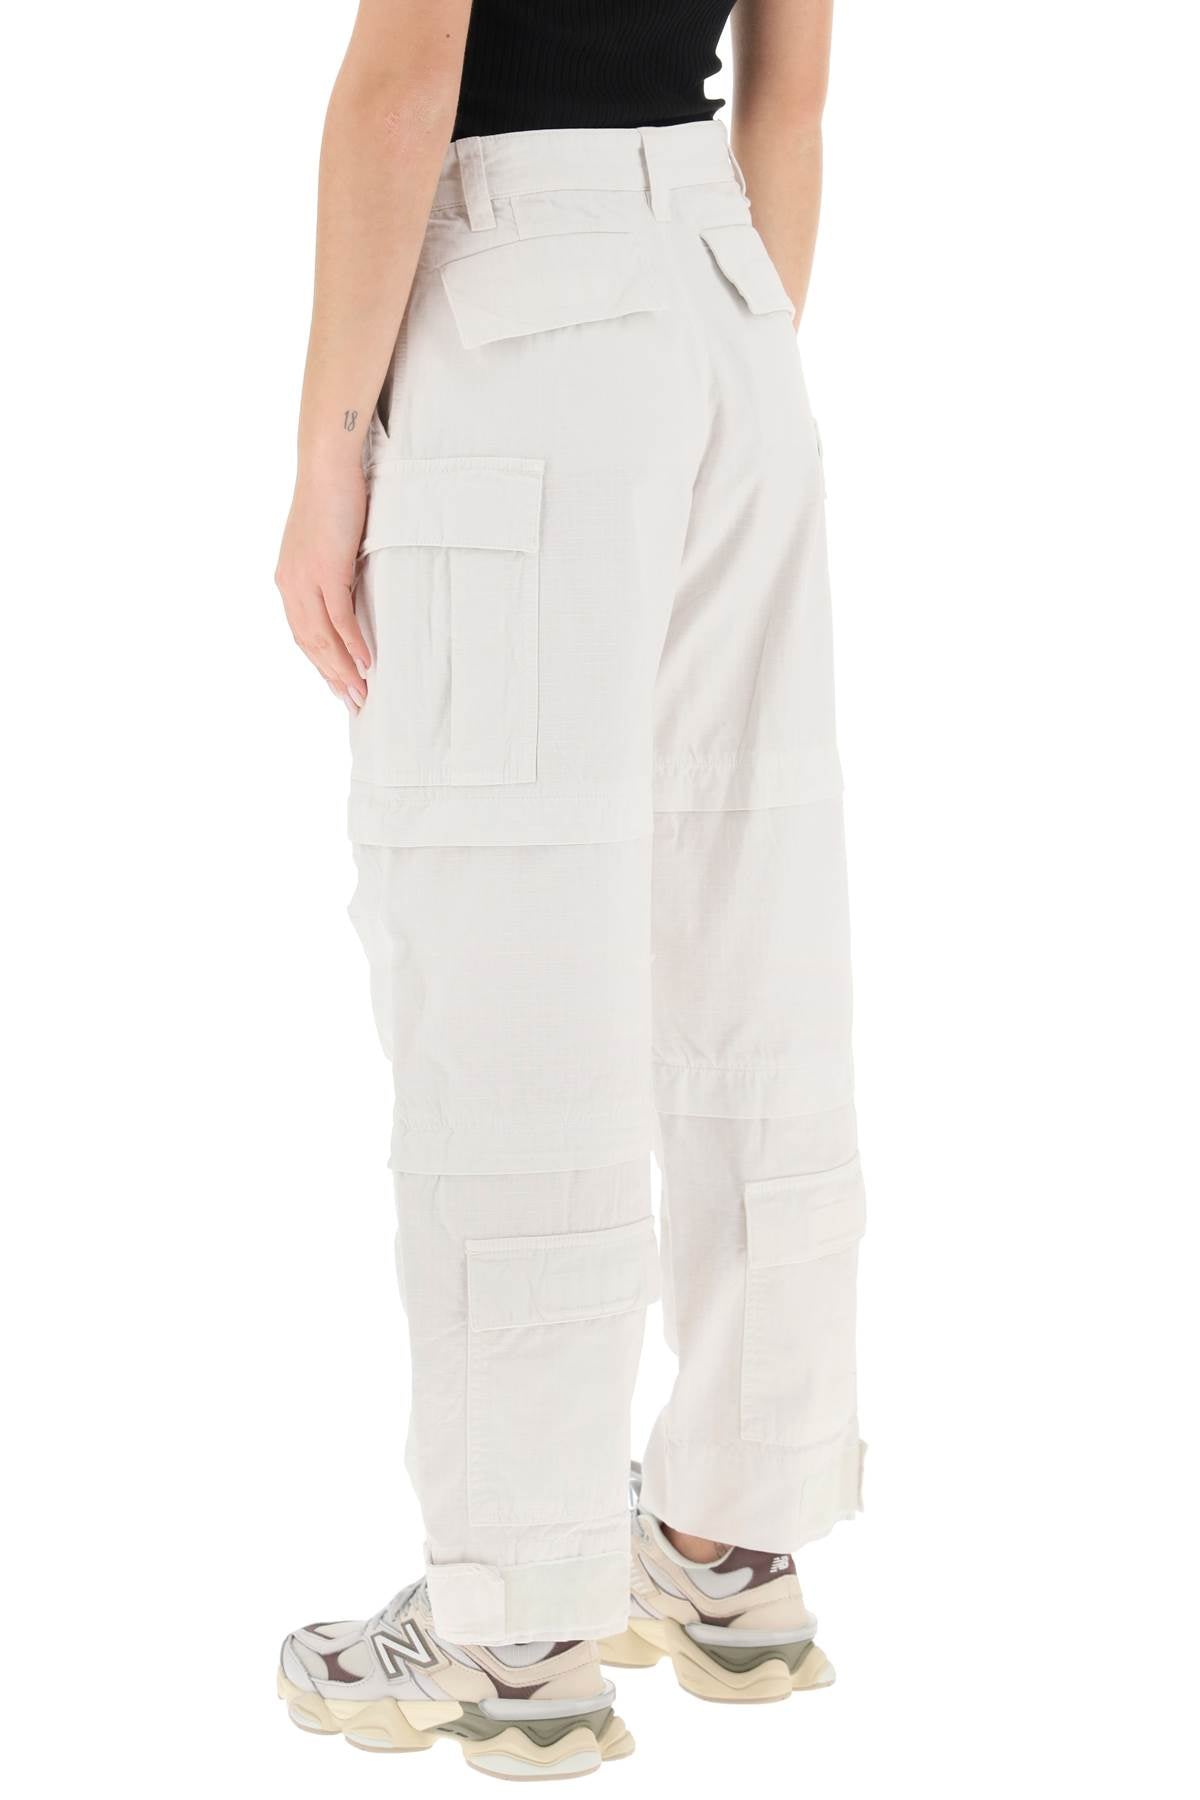 Darkpark 'julia' ripstop cotton cargo pants-2